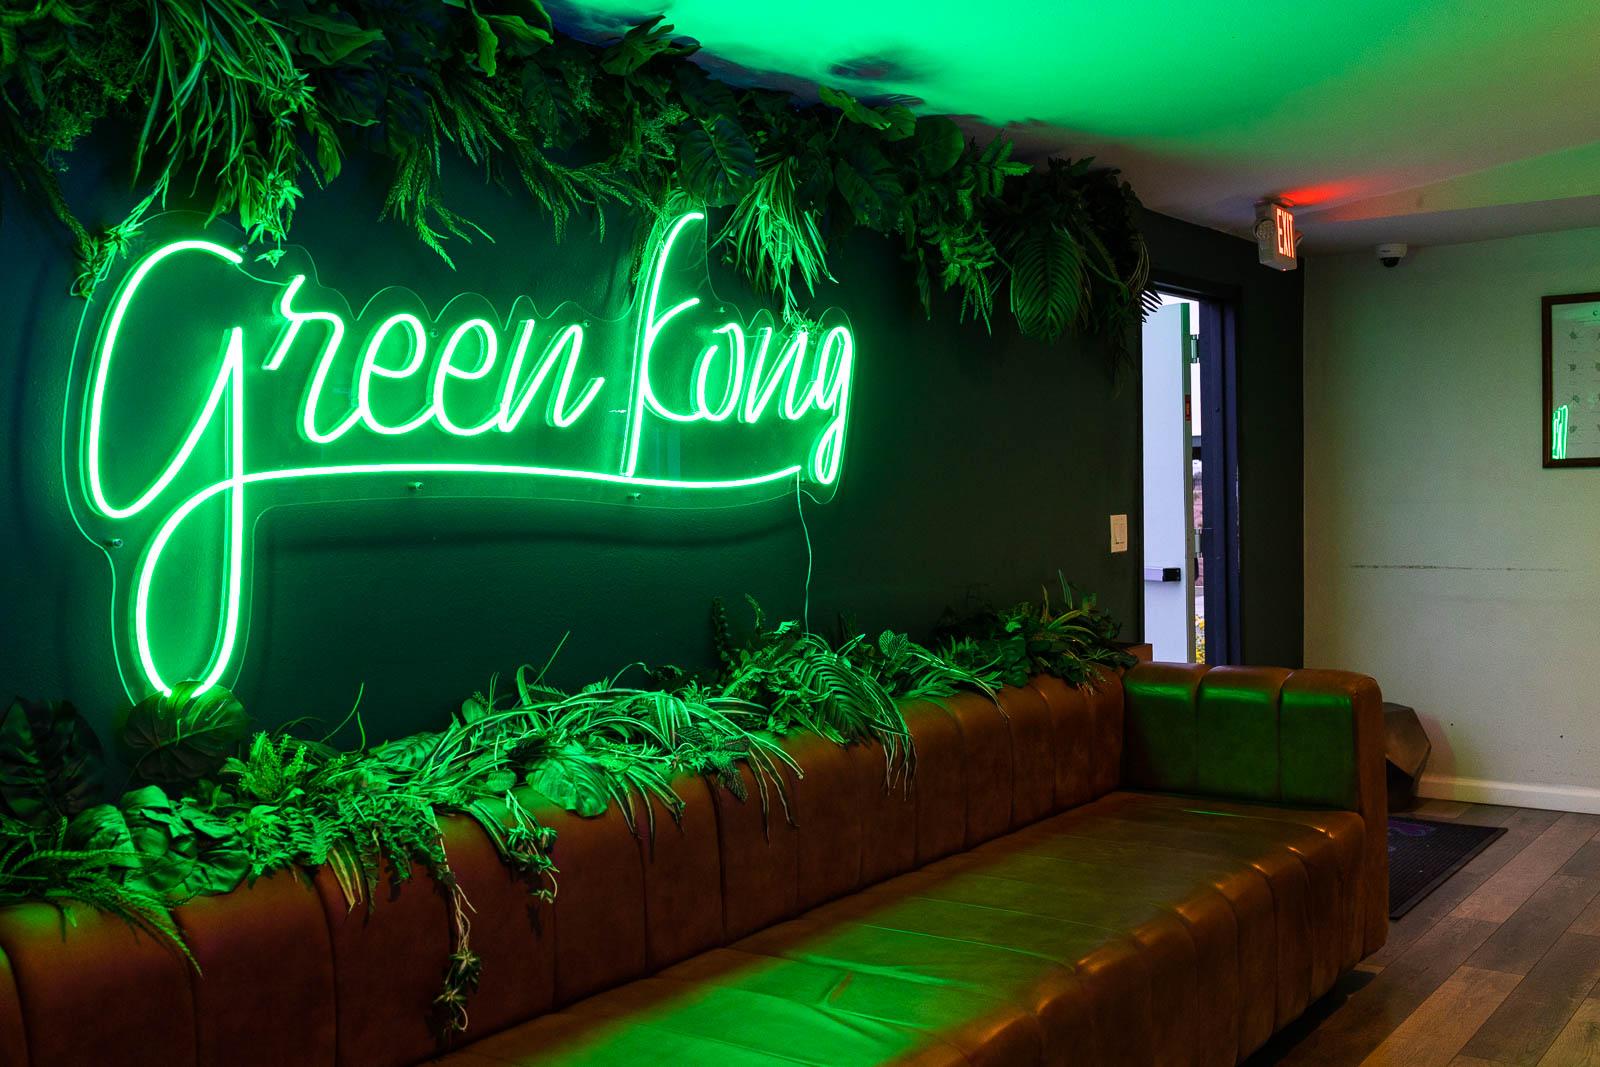 Green Kong Dispensary